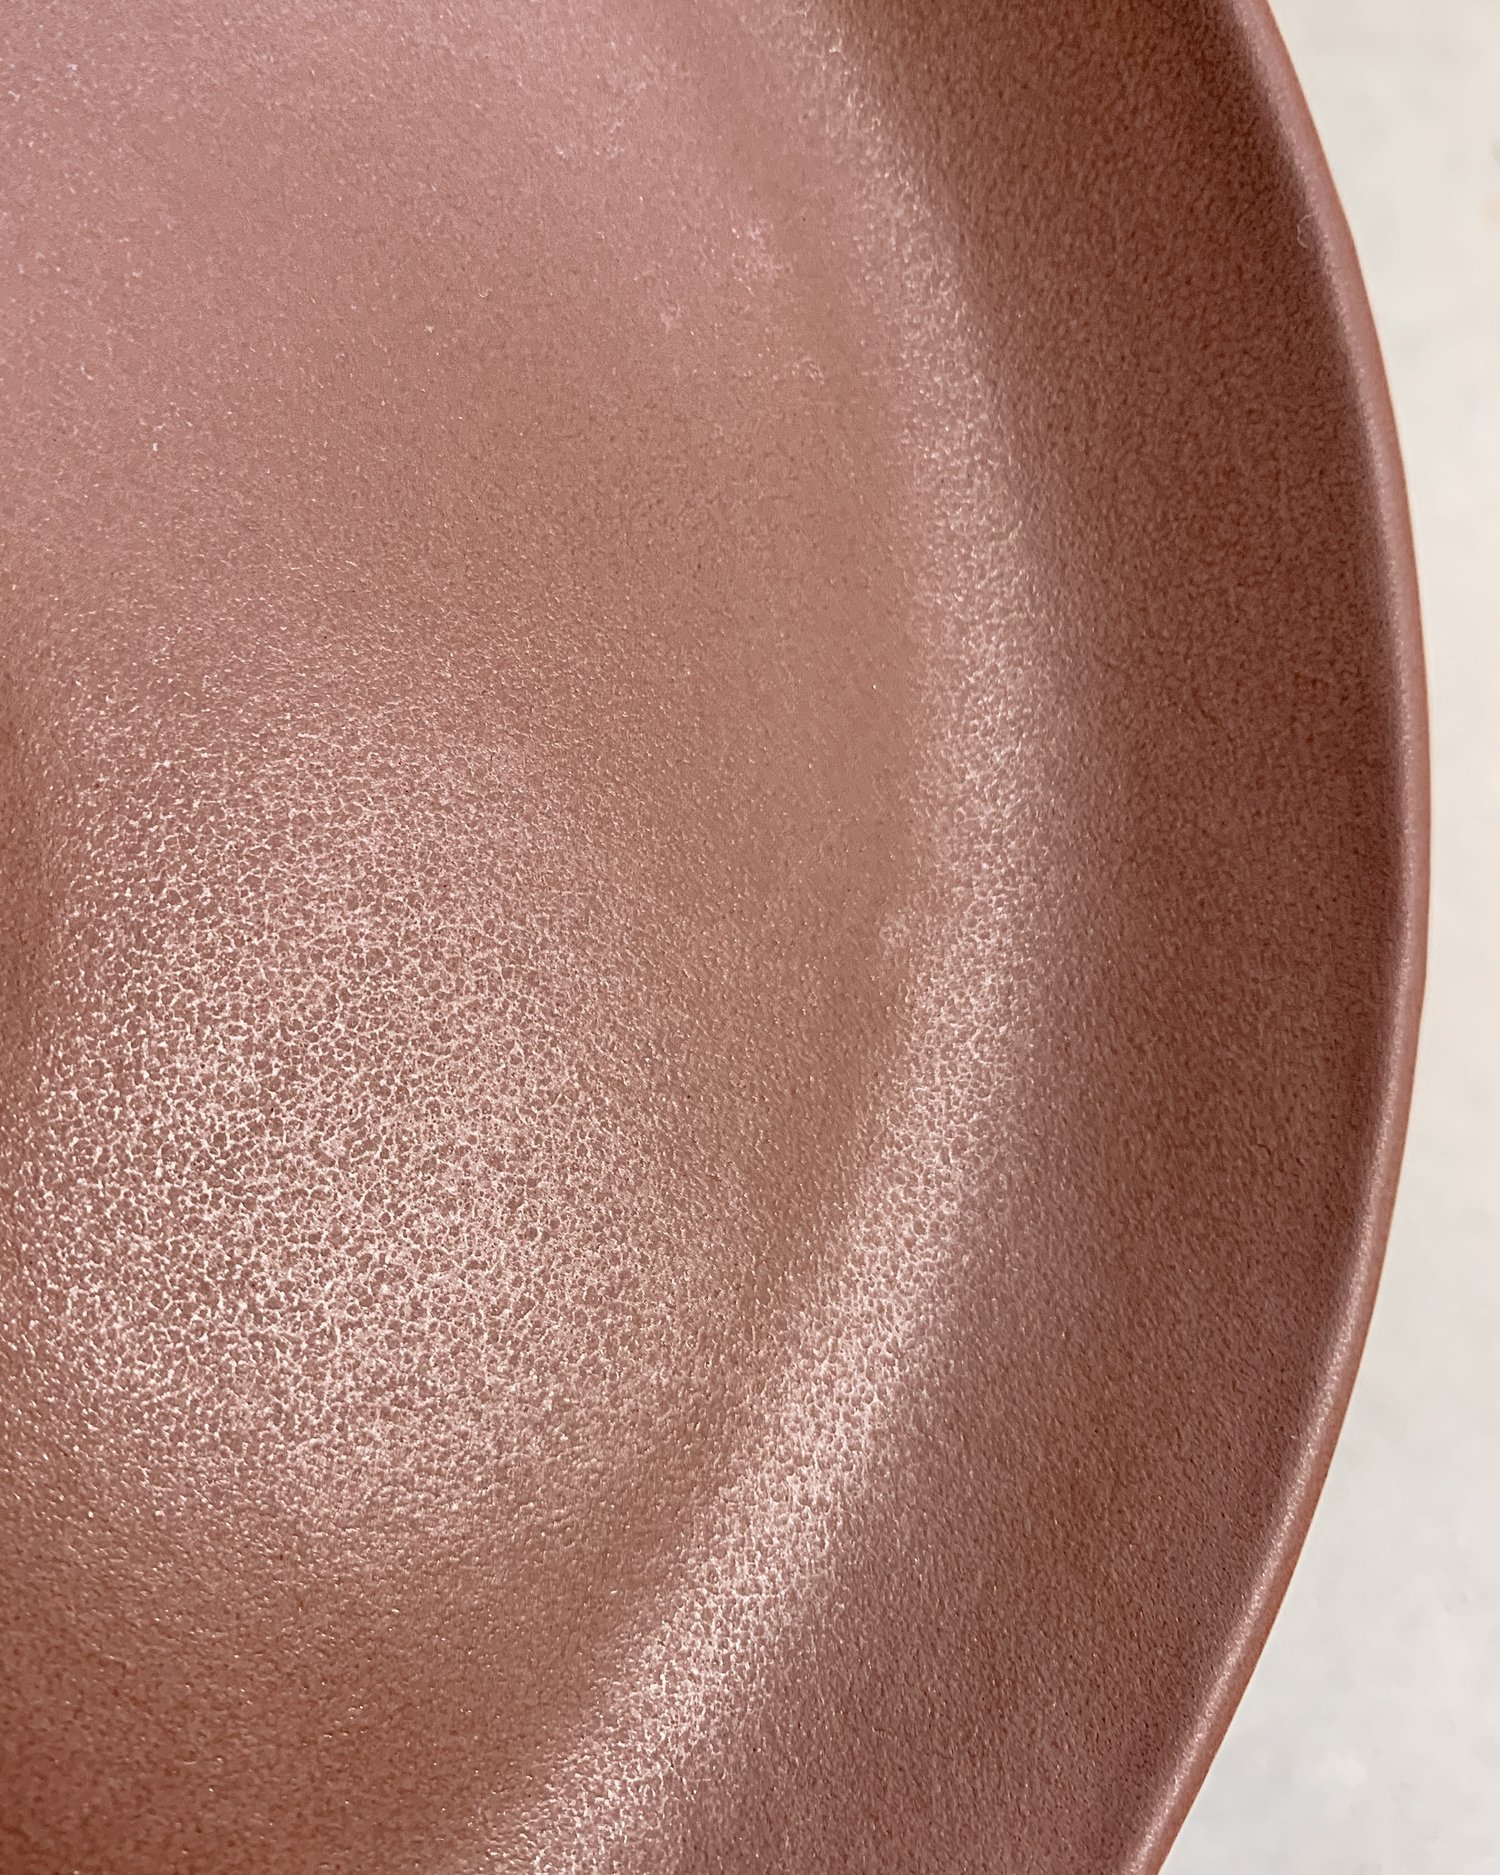 Chestnut's leathery texture.